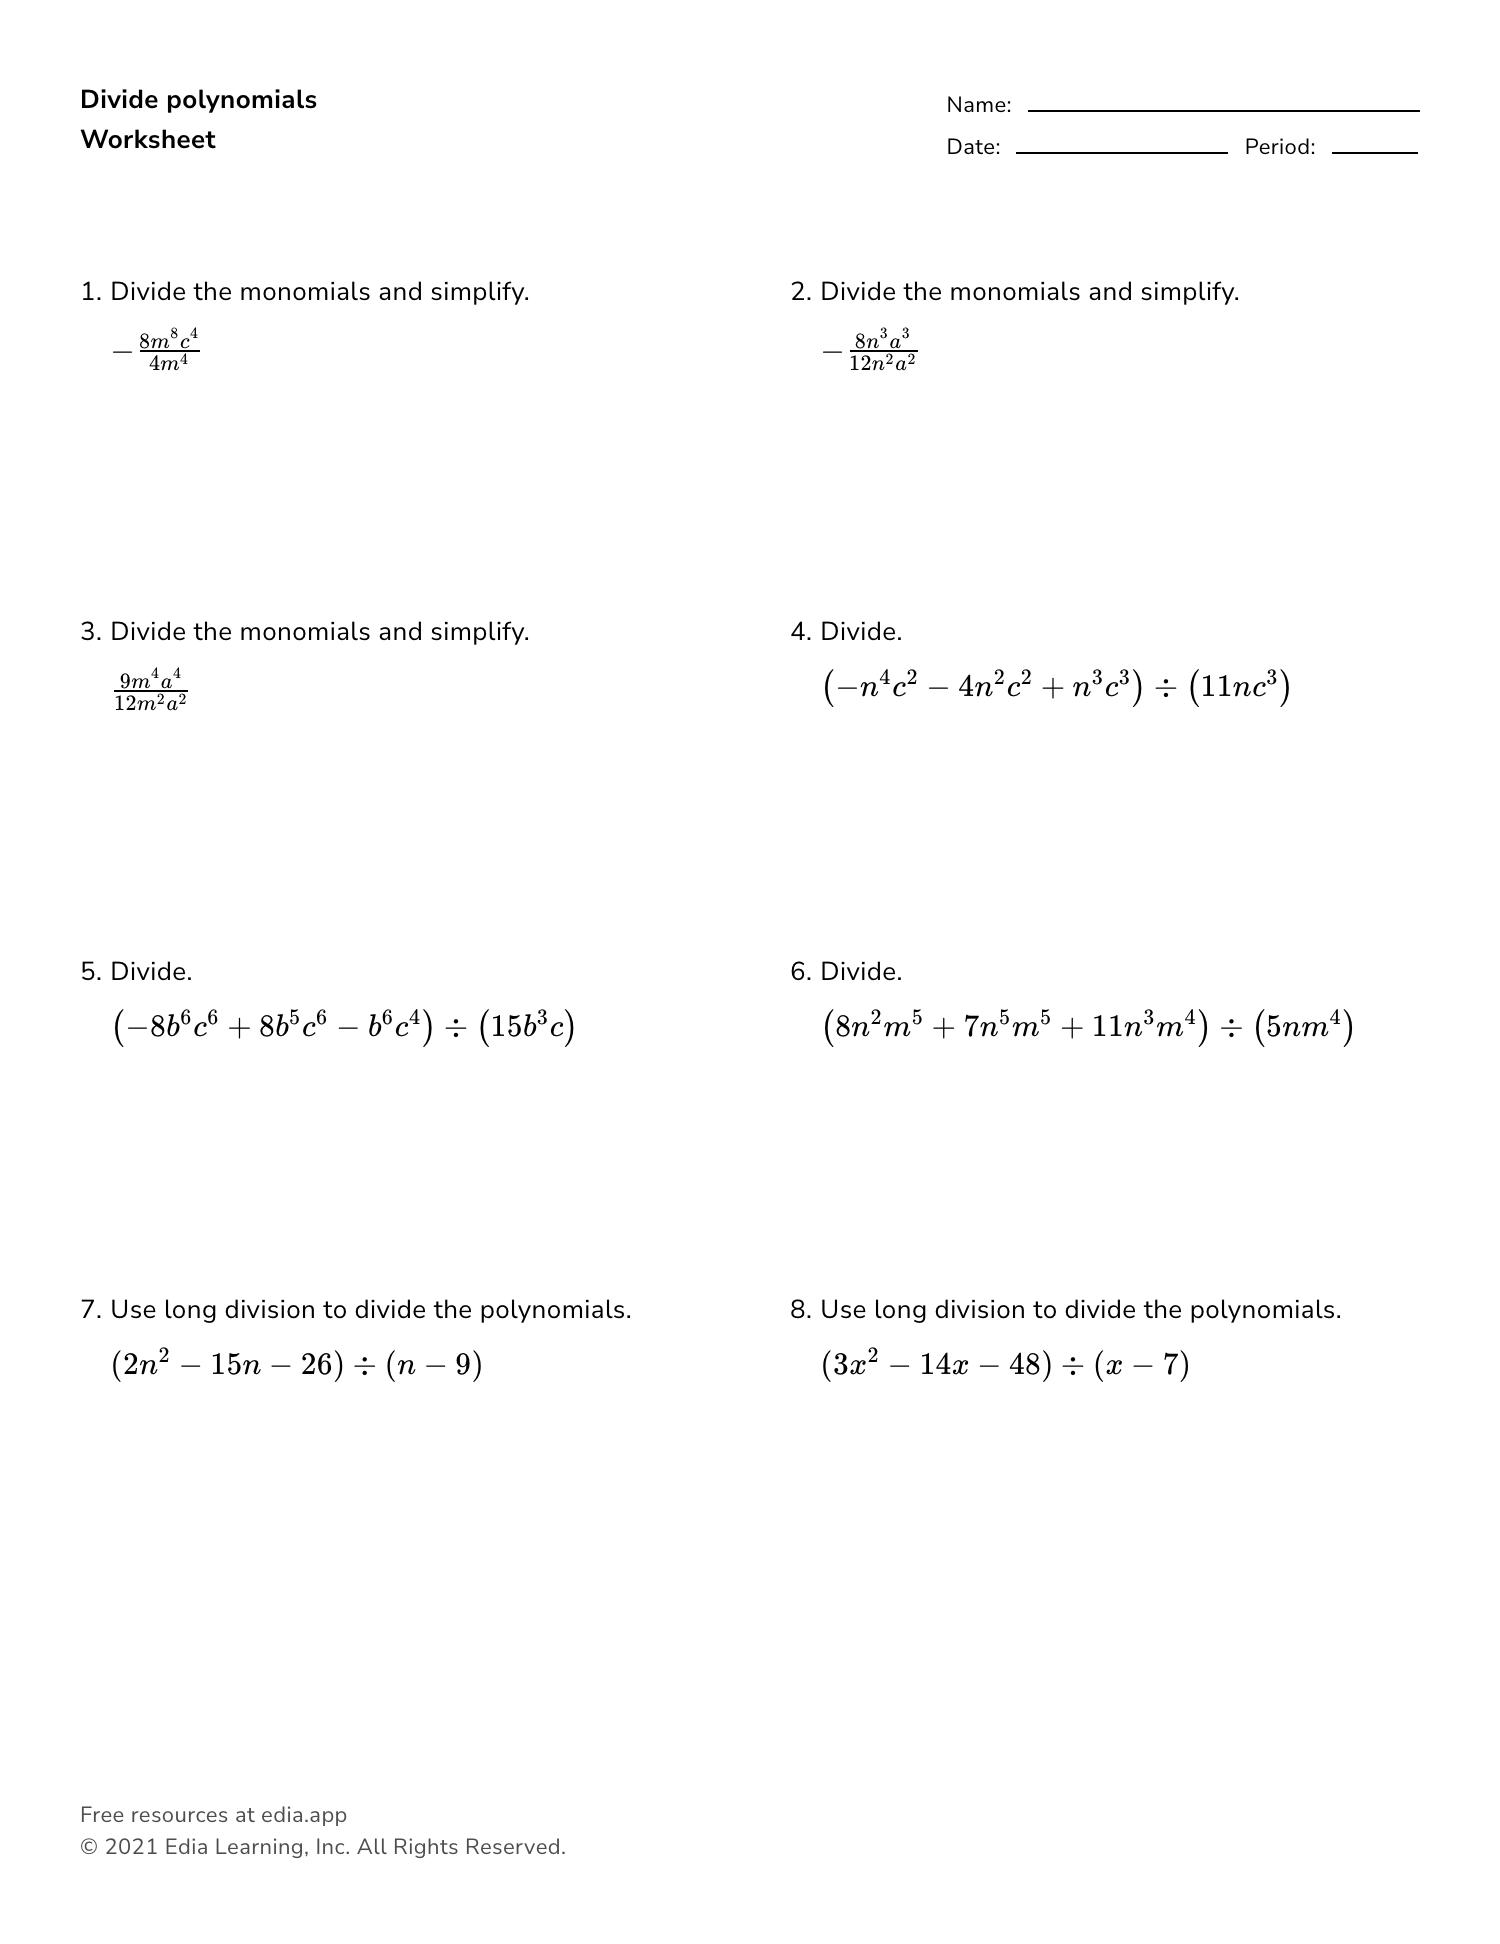 Divide Polynomials - Worksheet Intended For Long Division Of Polynomials Worksheet